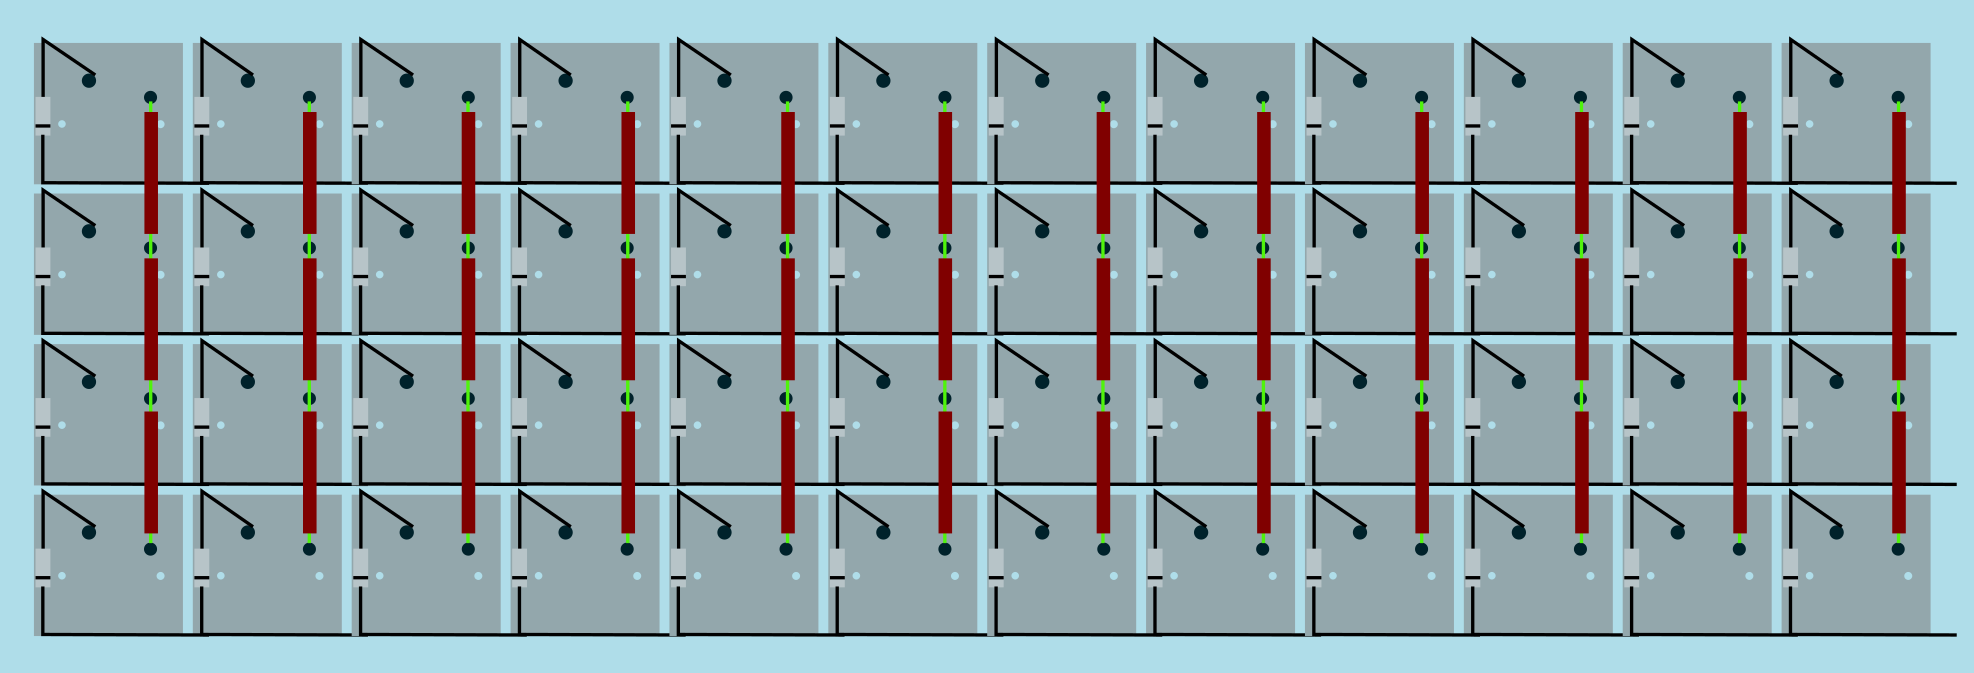 Example Planck matrix